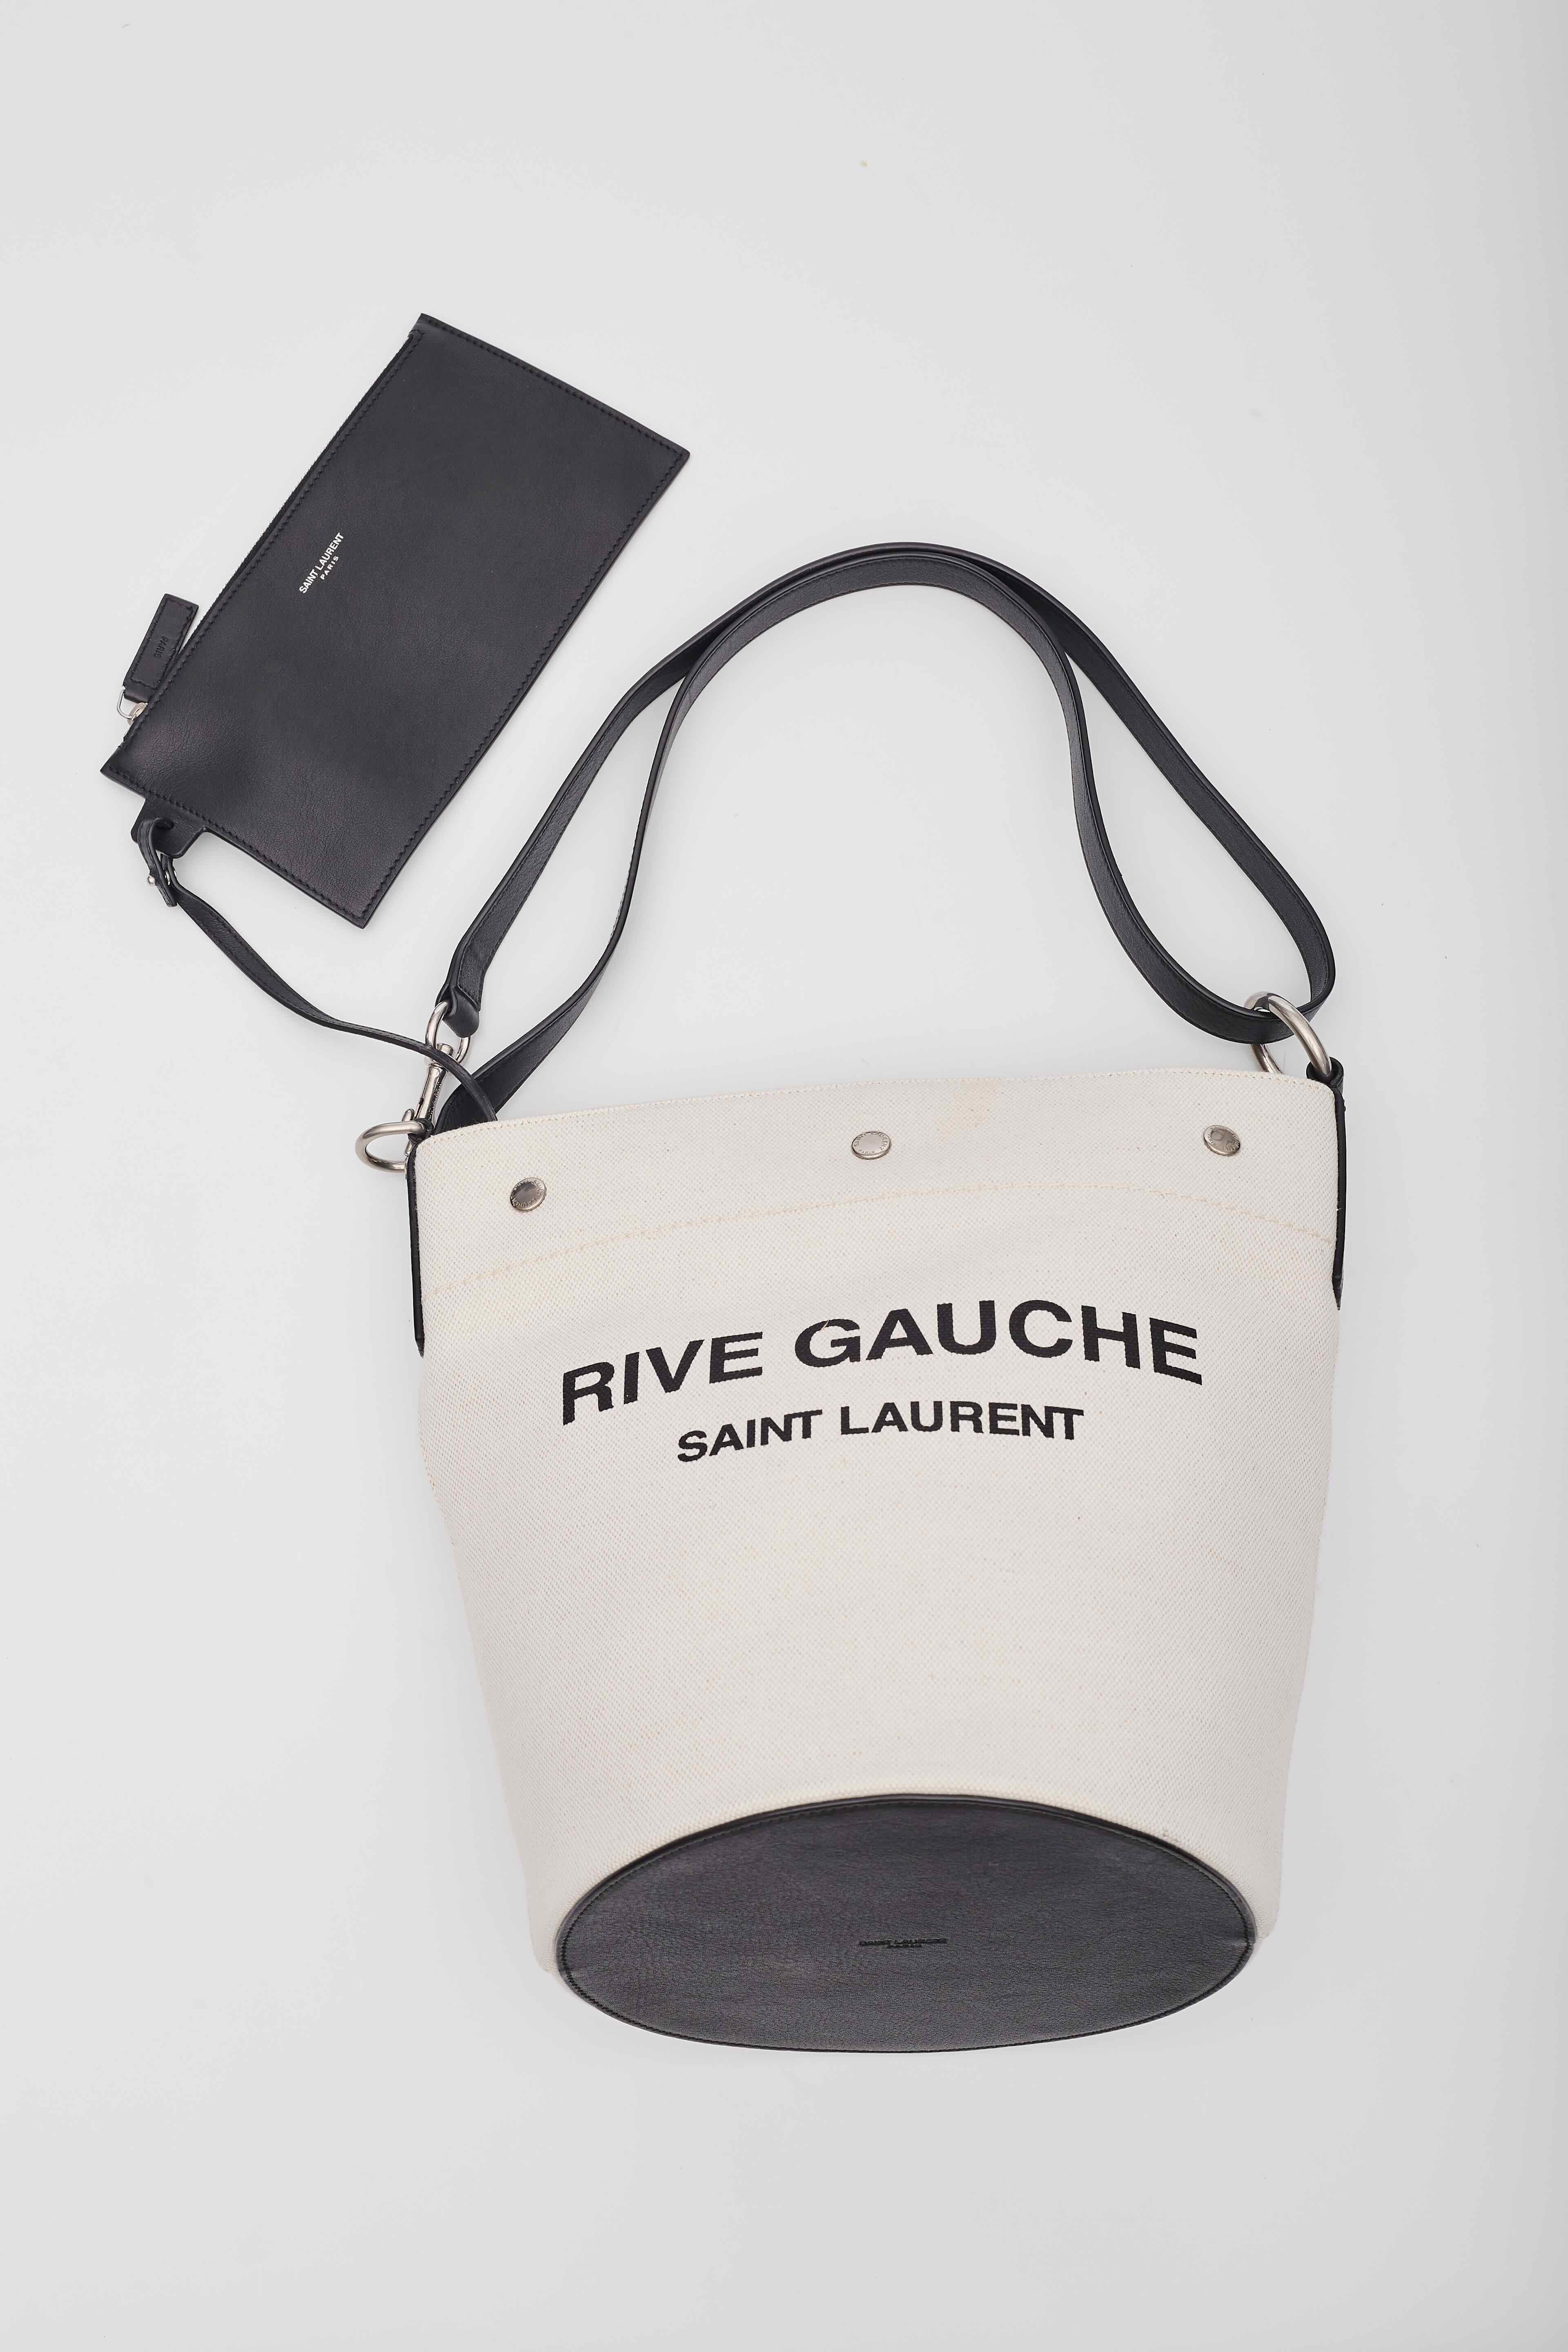 Saint Laurent Rive Gauche Tuscany White Linen Bucket Bag For Sale 1